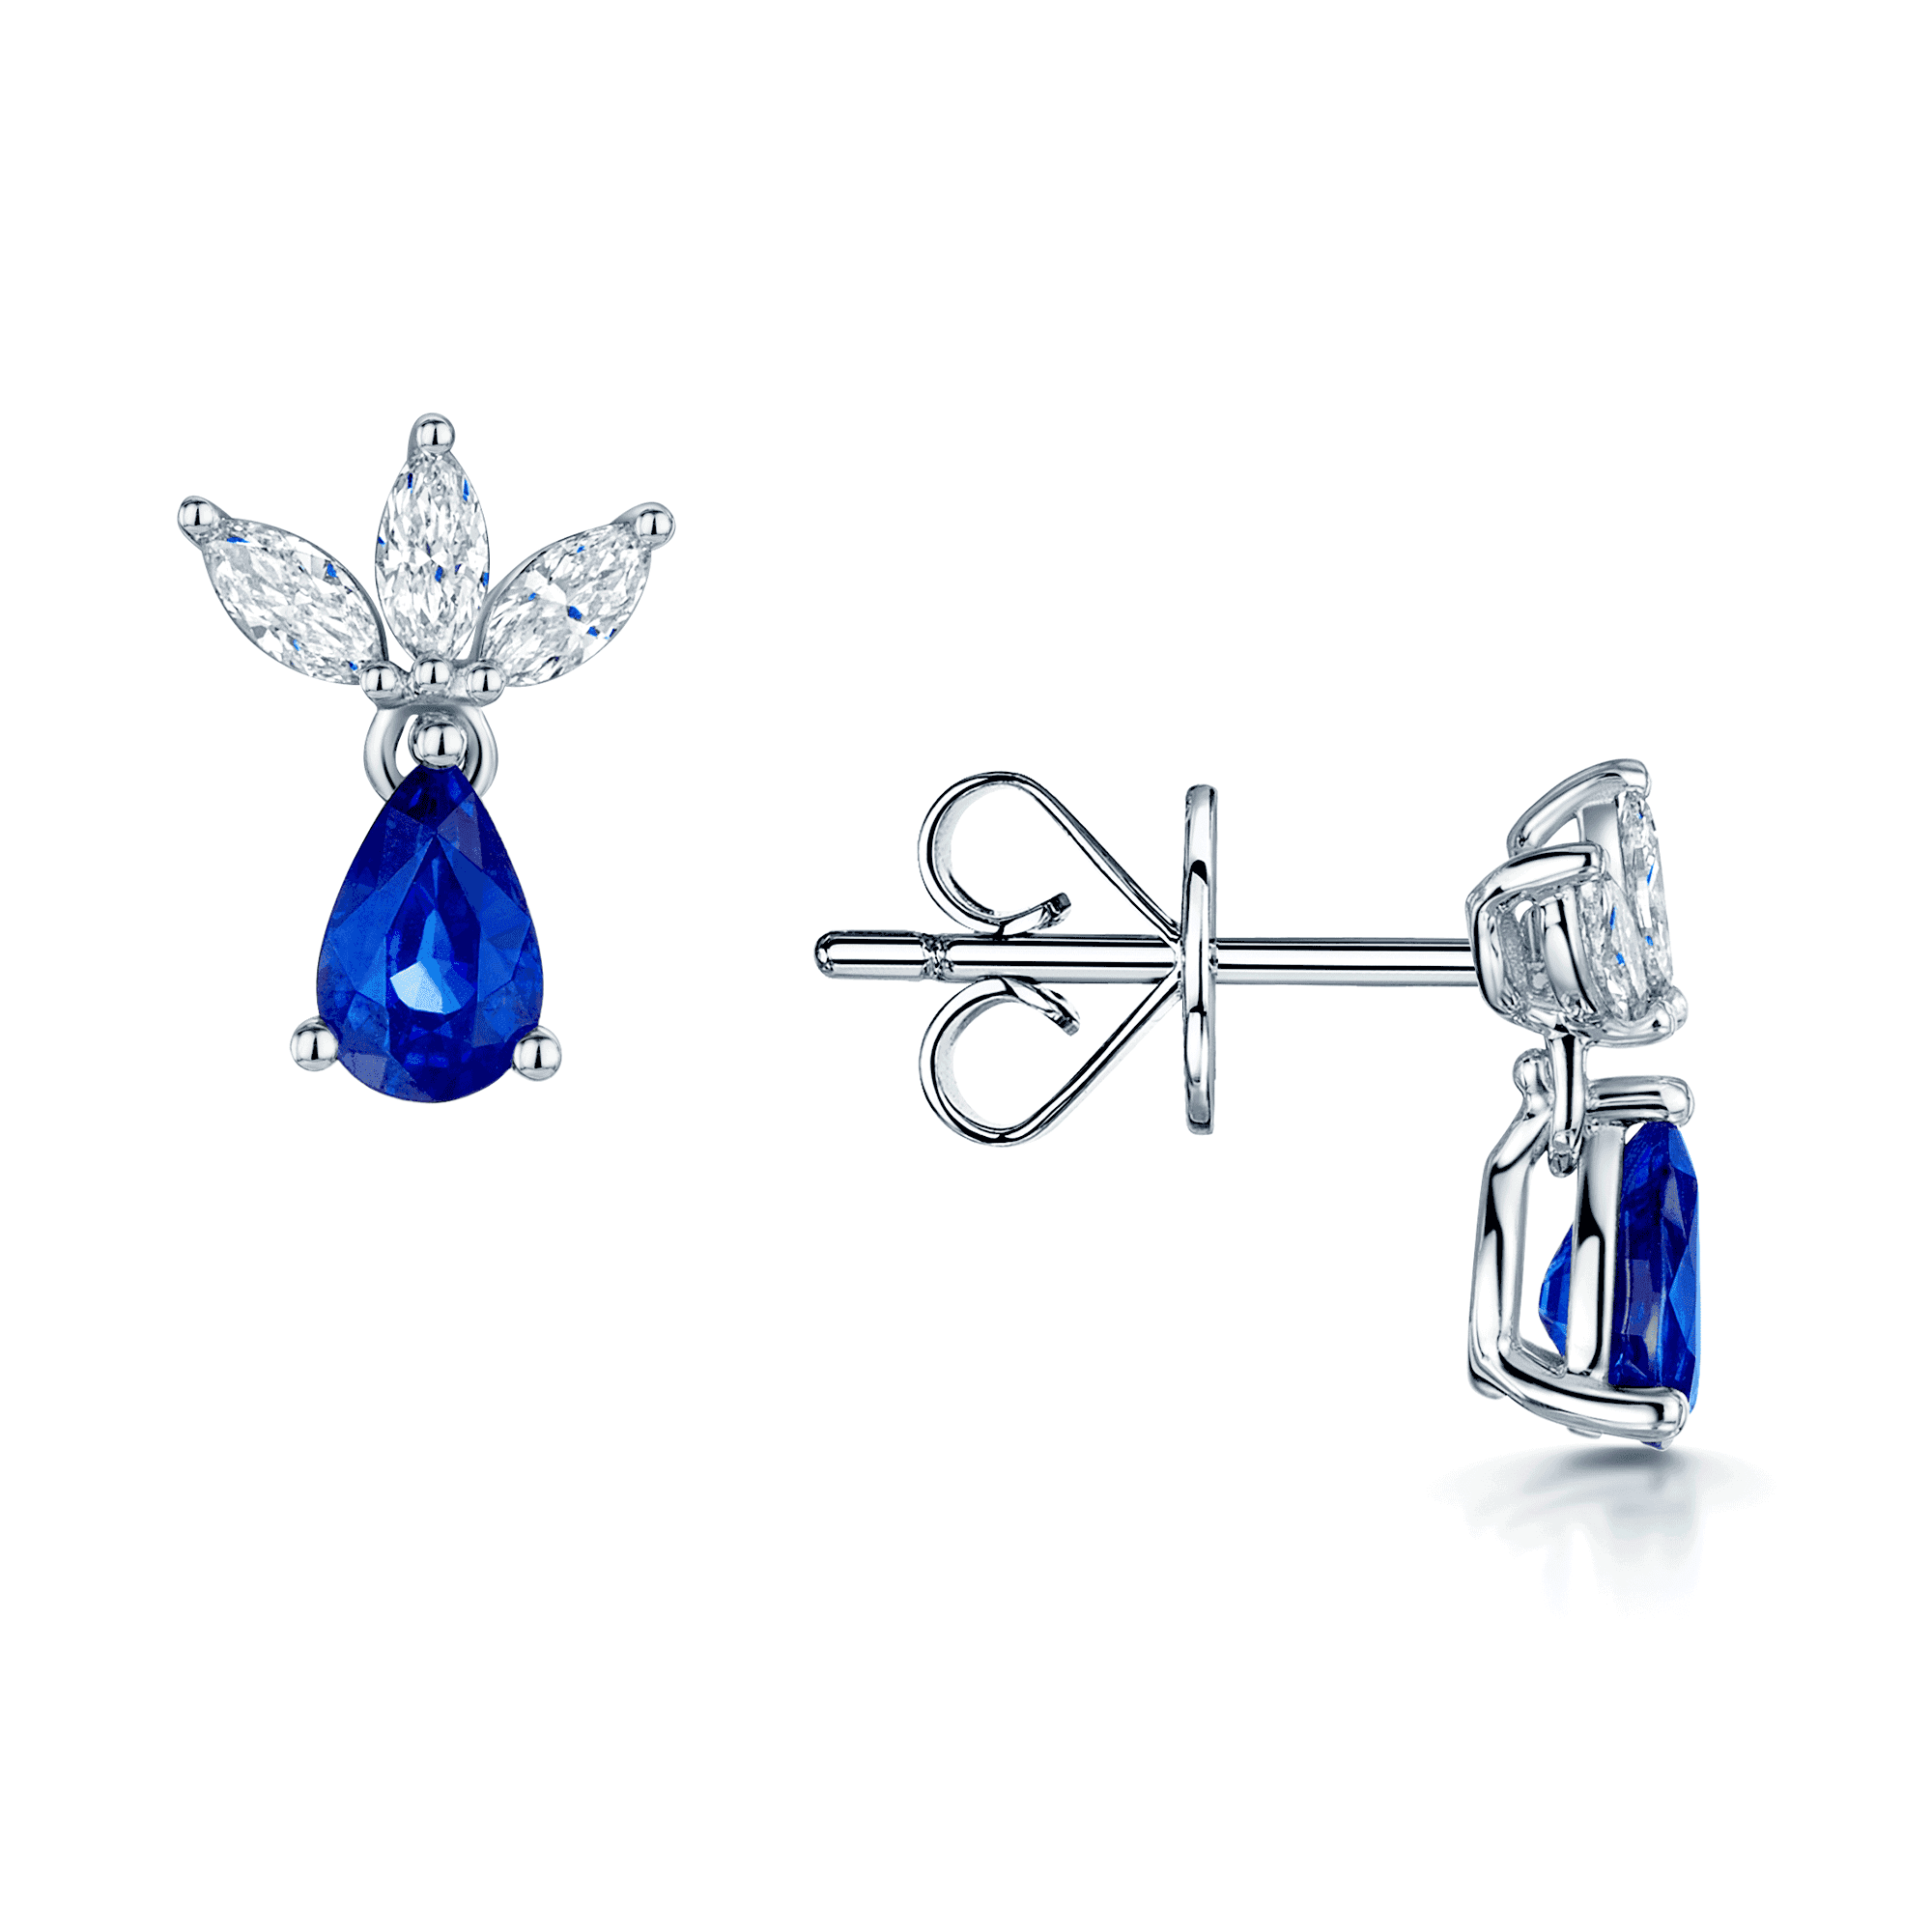 18ct White Gold Marquise Diamond & Pear Cut Blue Sapphire Drop Earrings